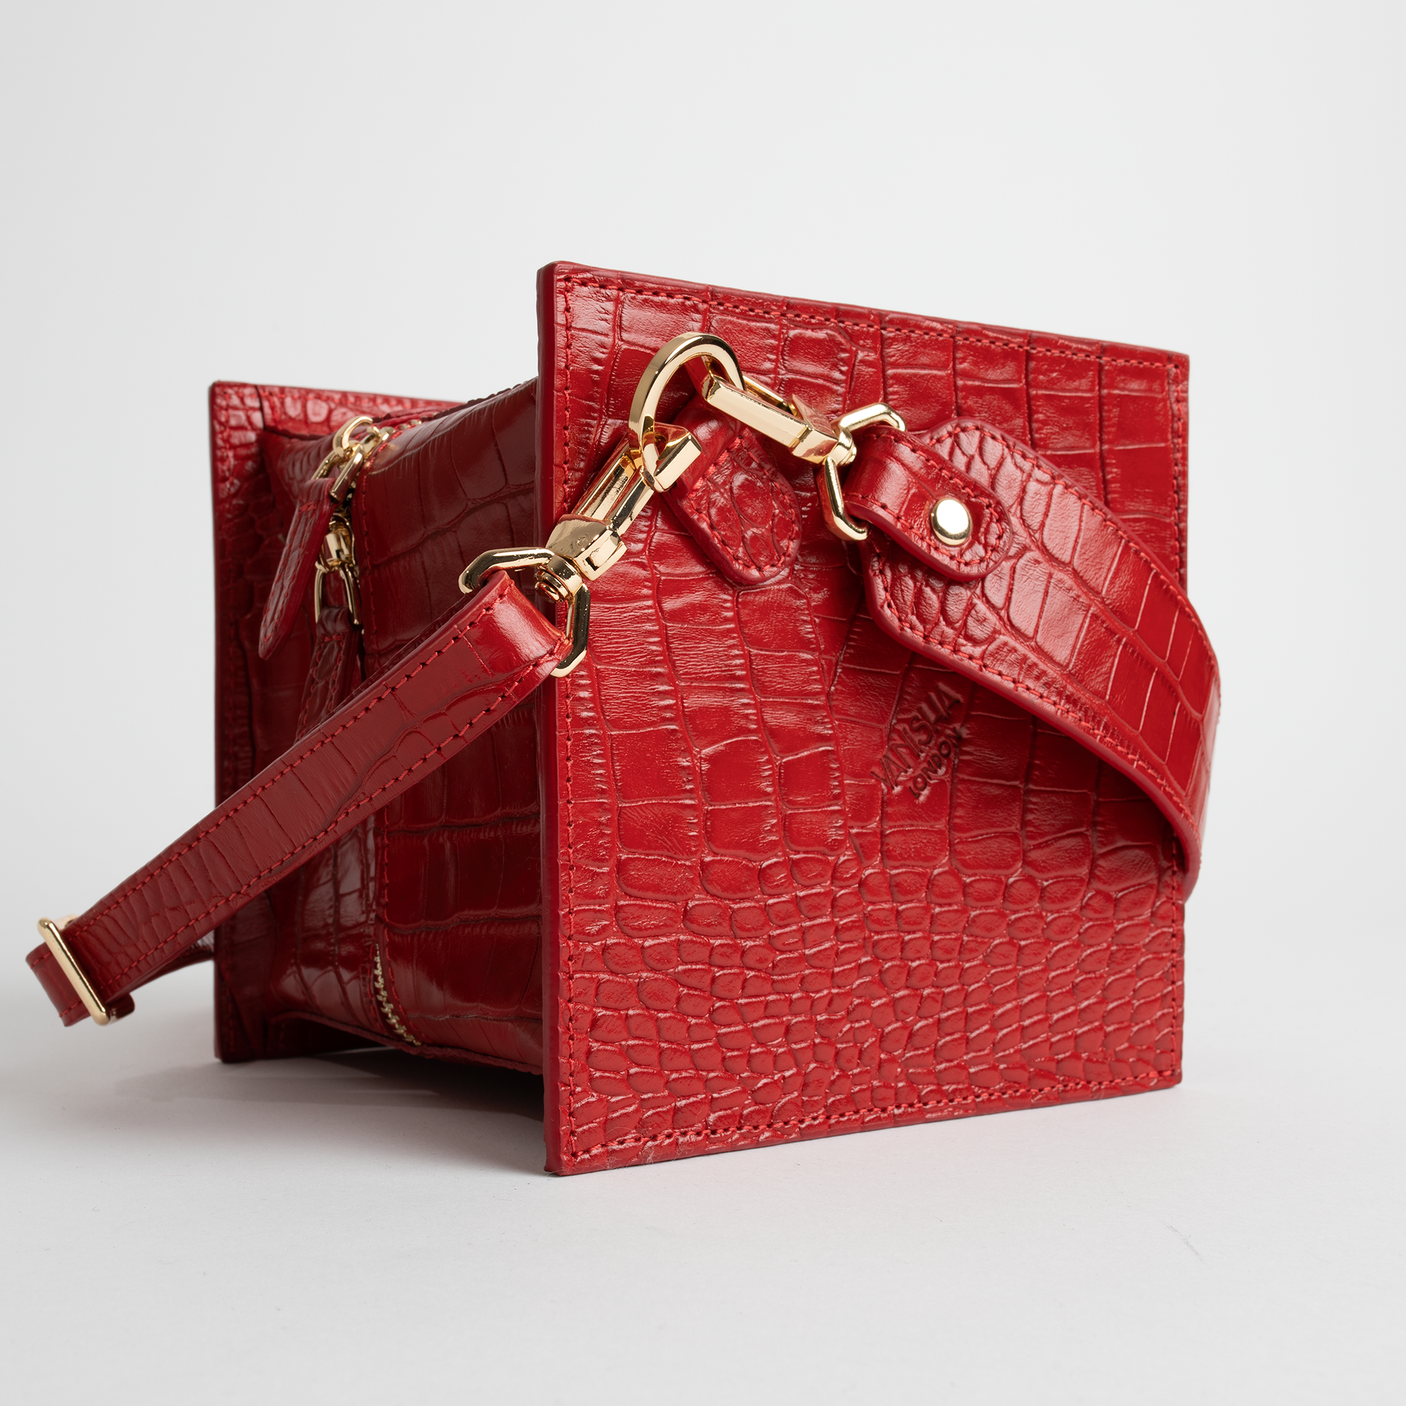 Lola bag in ruby red crocodile print